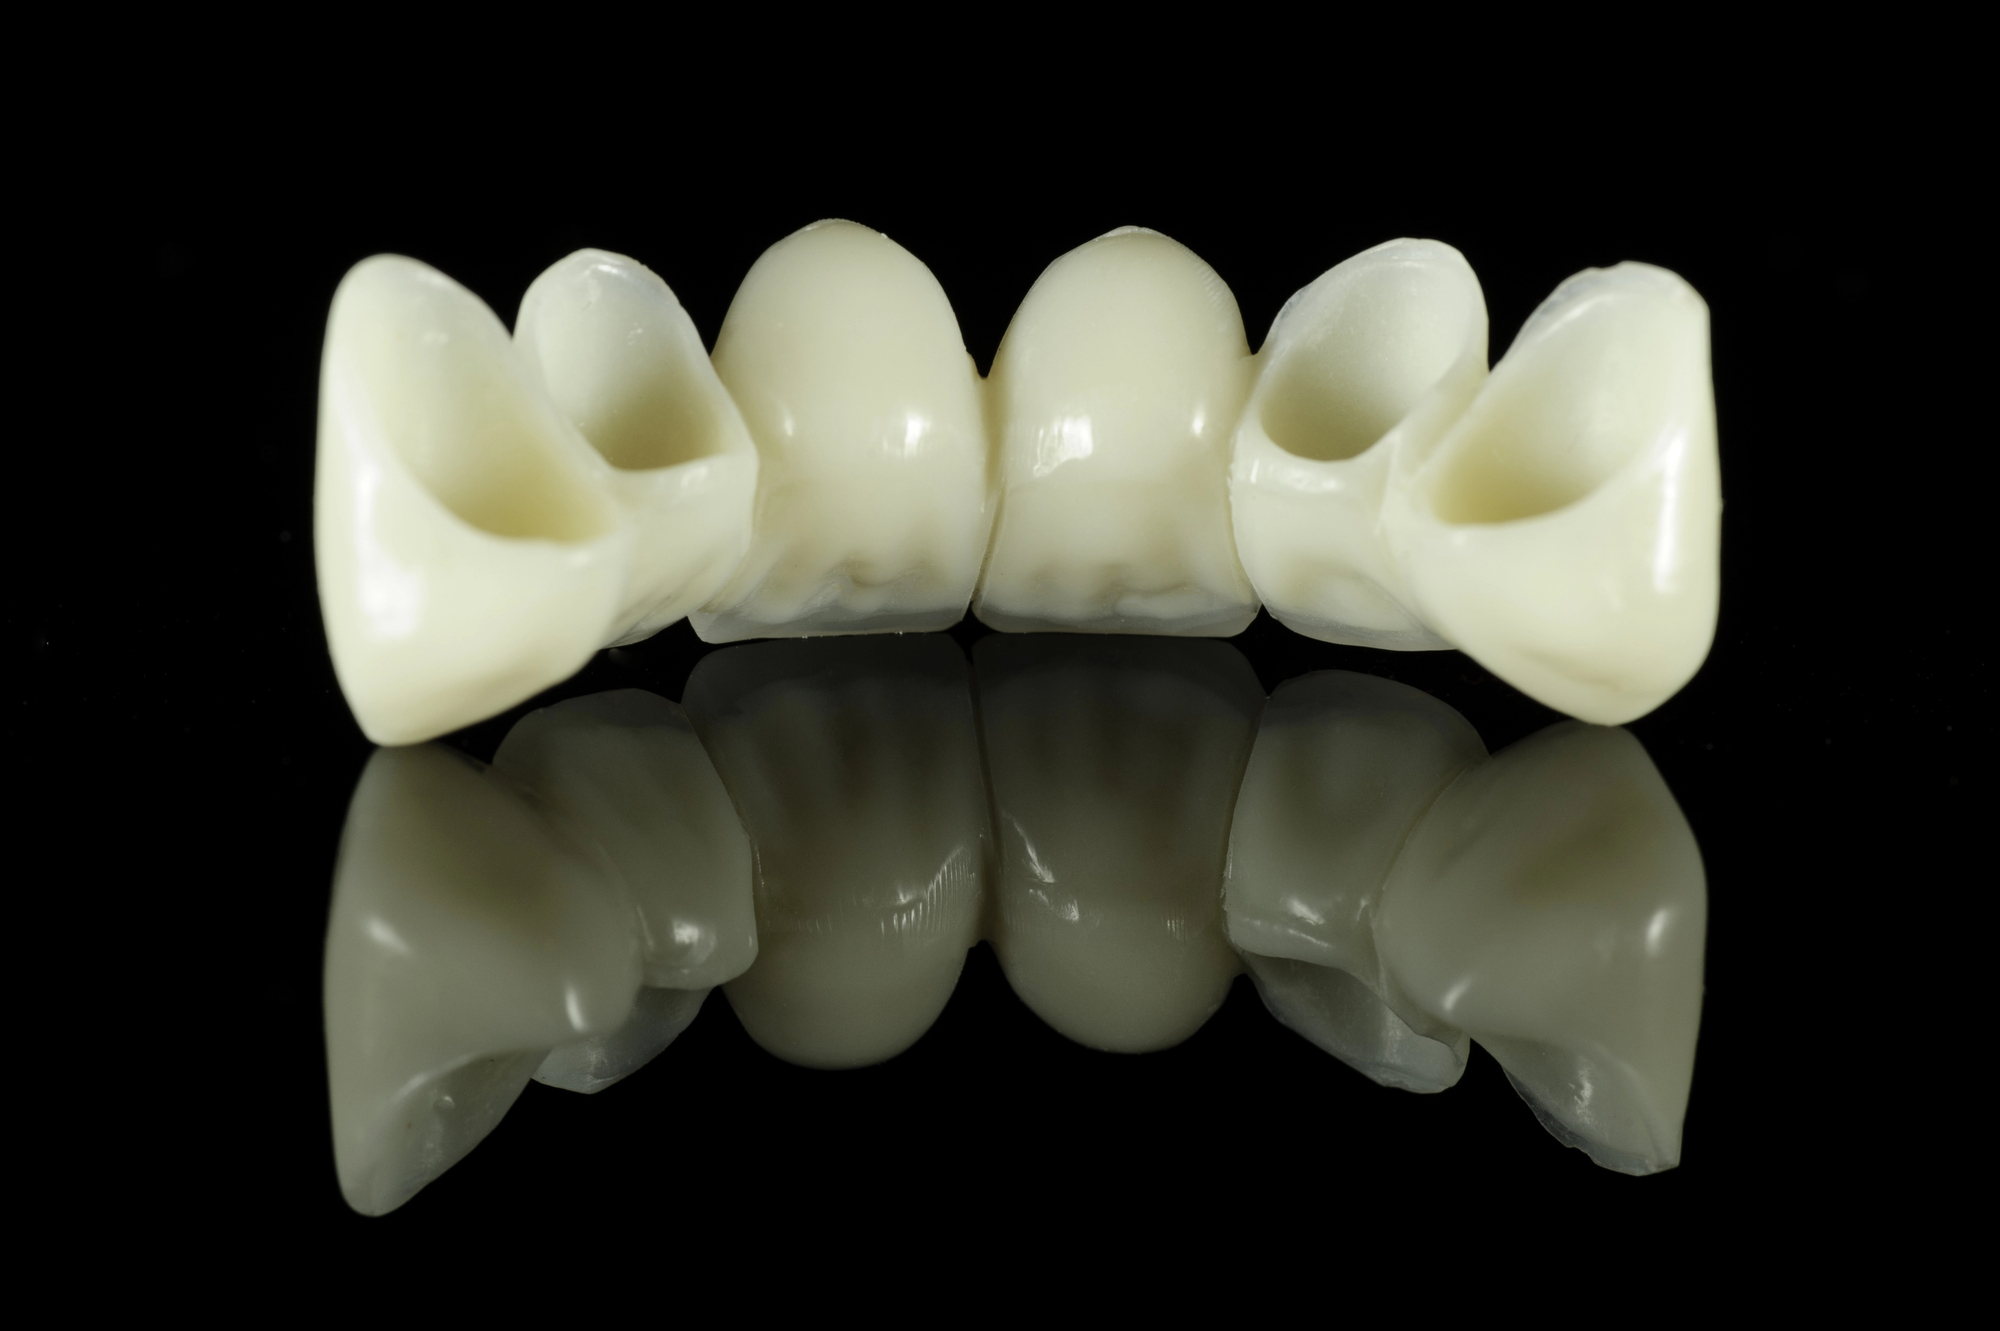 Teeth on One Dental Bridge: How Many?